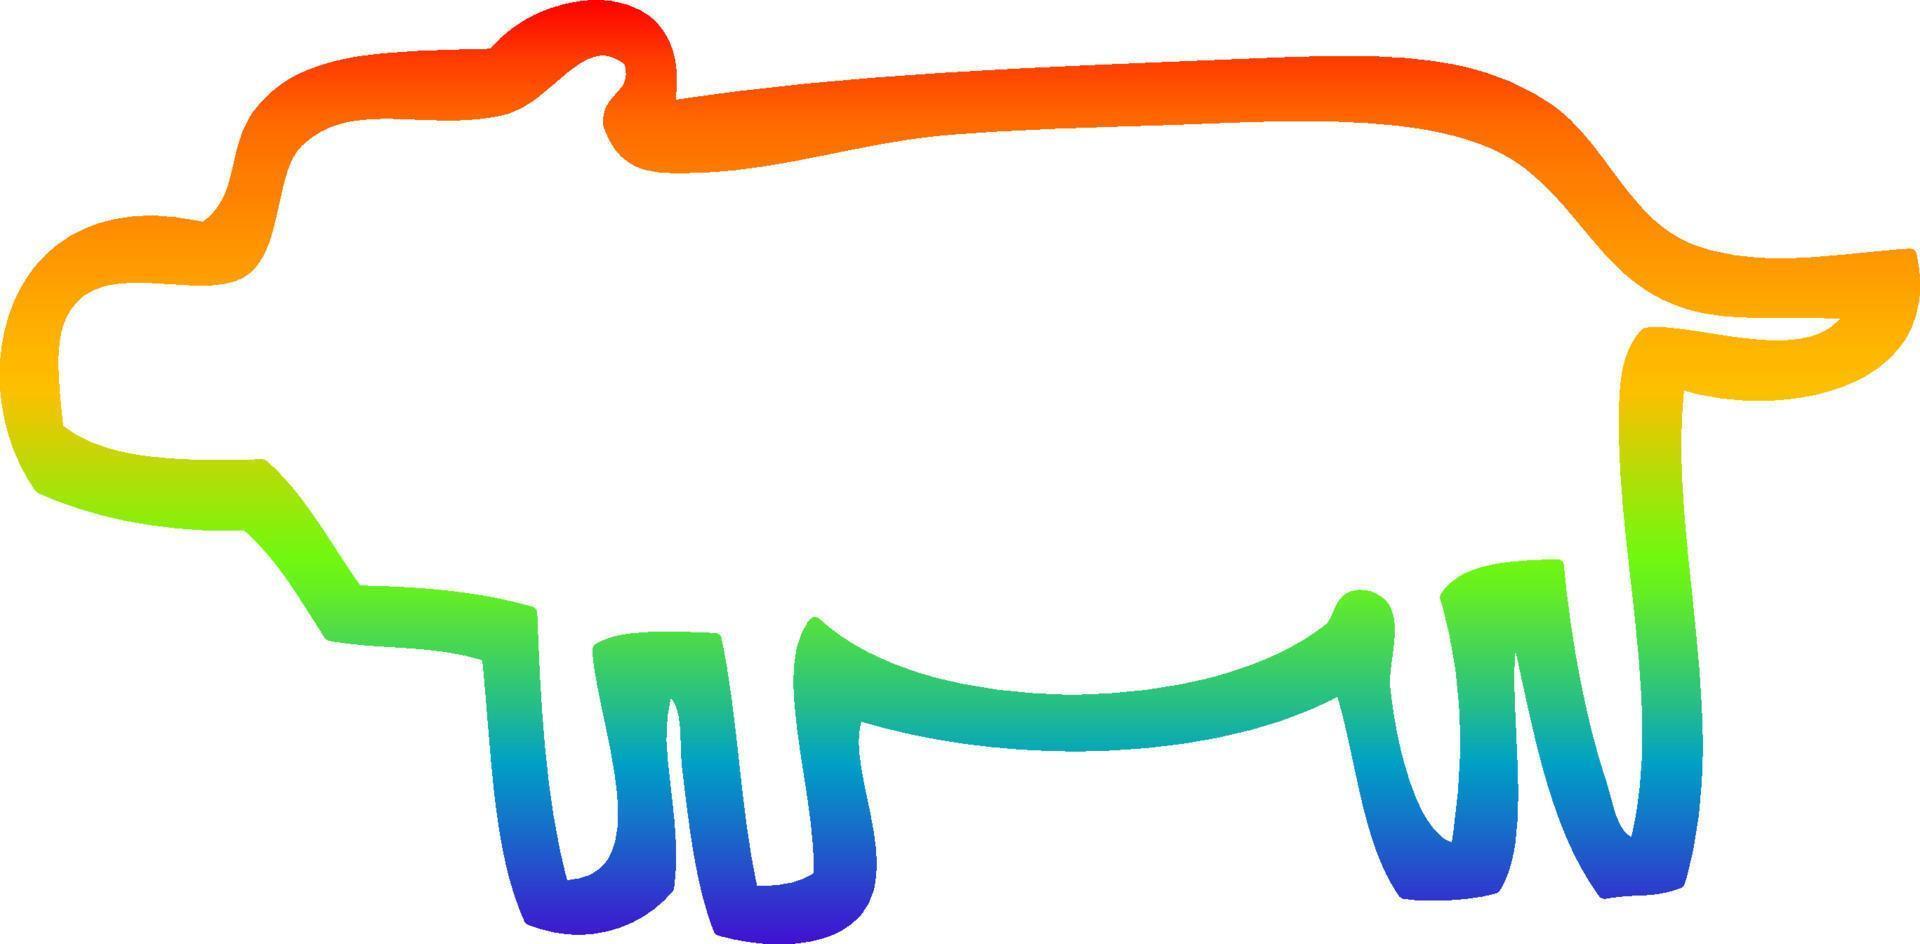 arco iris gradiente línea dibujo dibujos animados animal símbolo vector